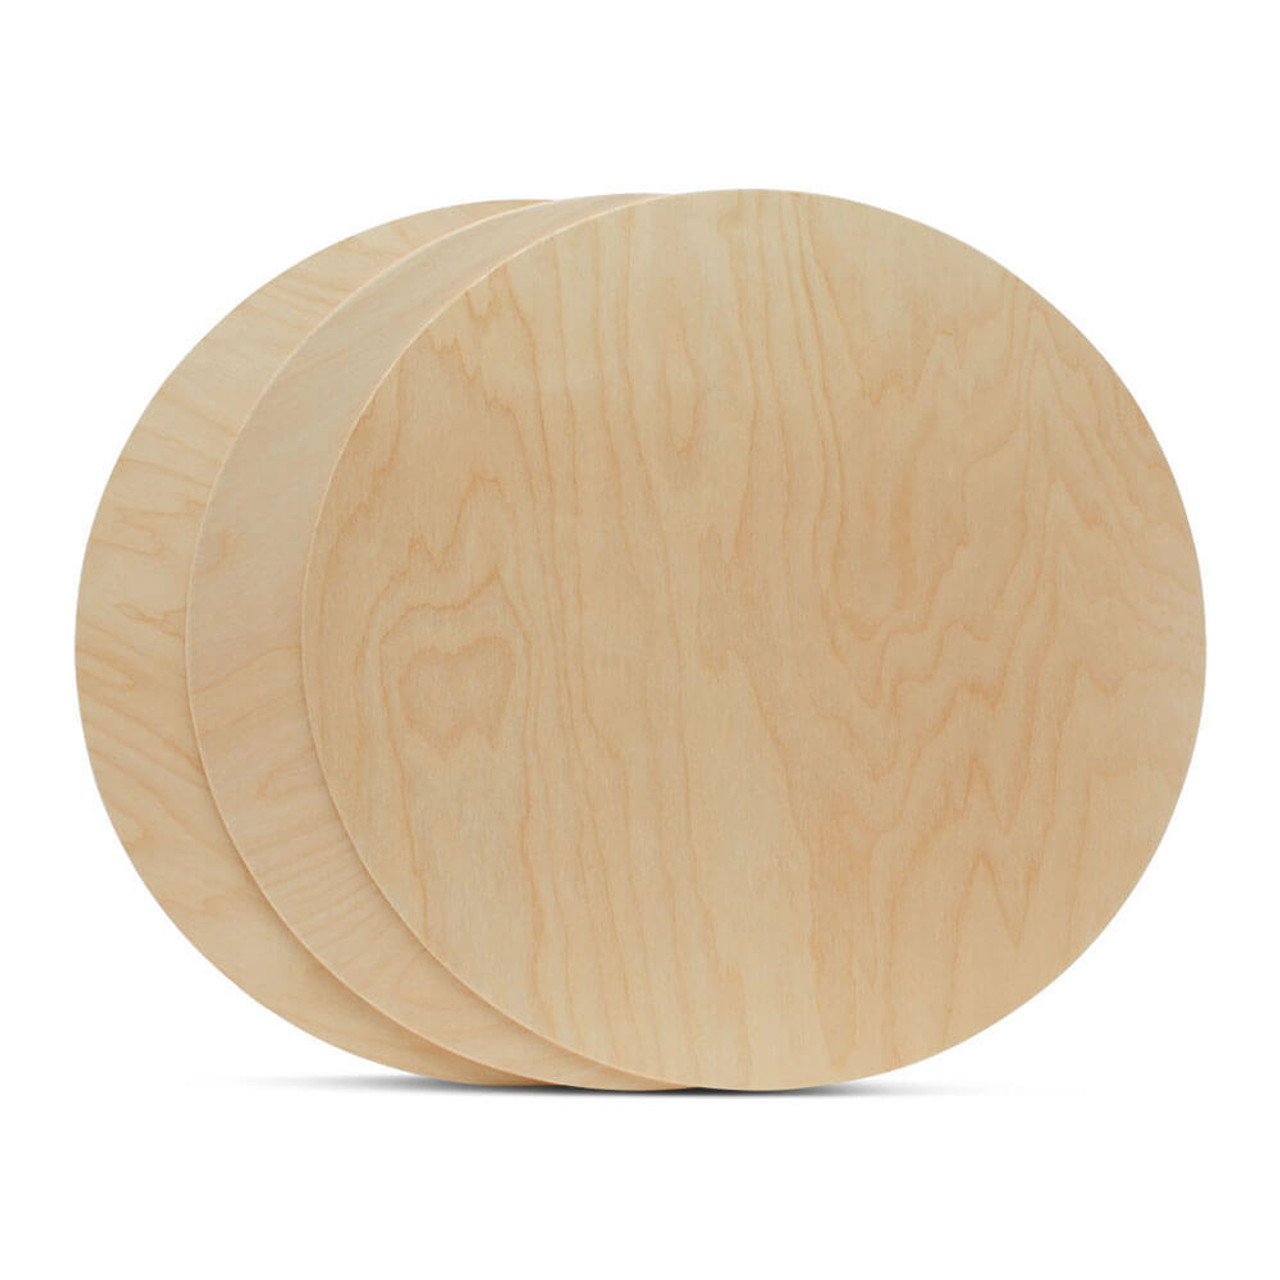 Wooden Circles 18 x 1/8 Round Craft Wood